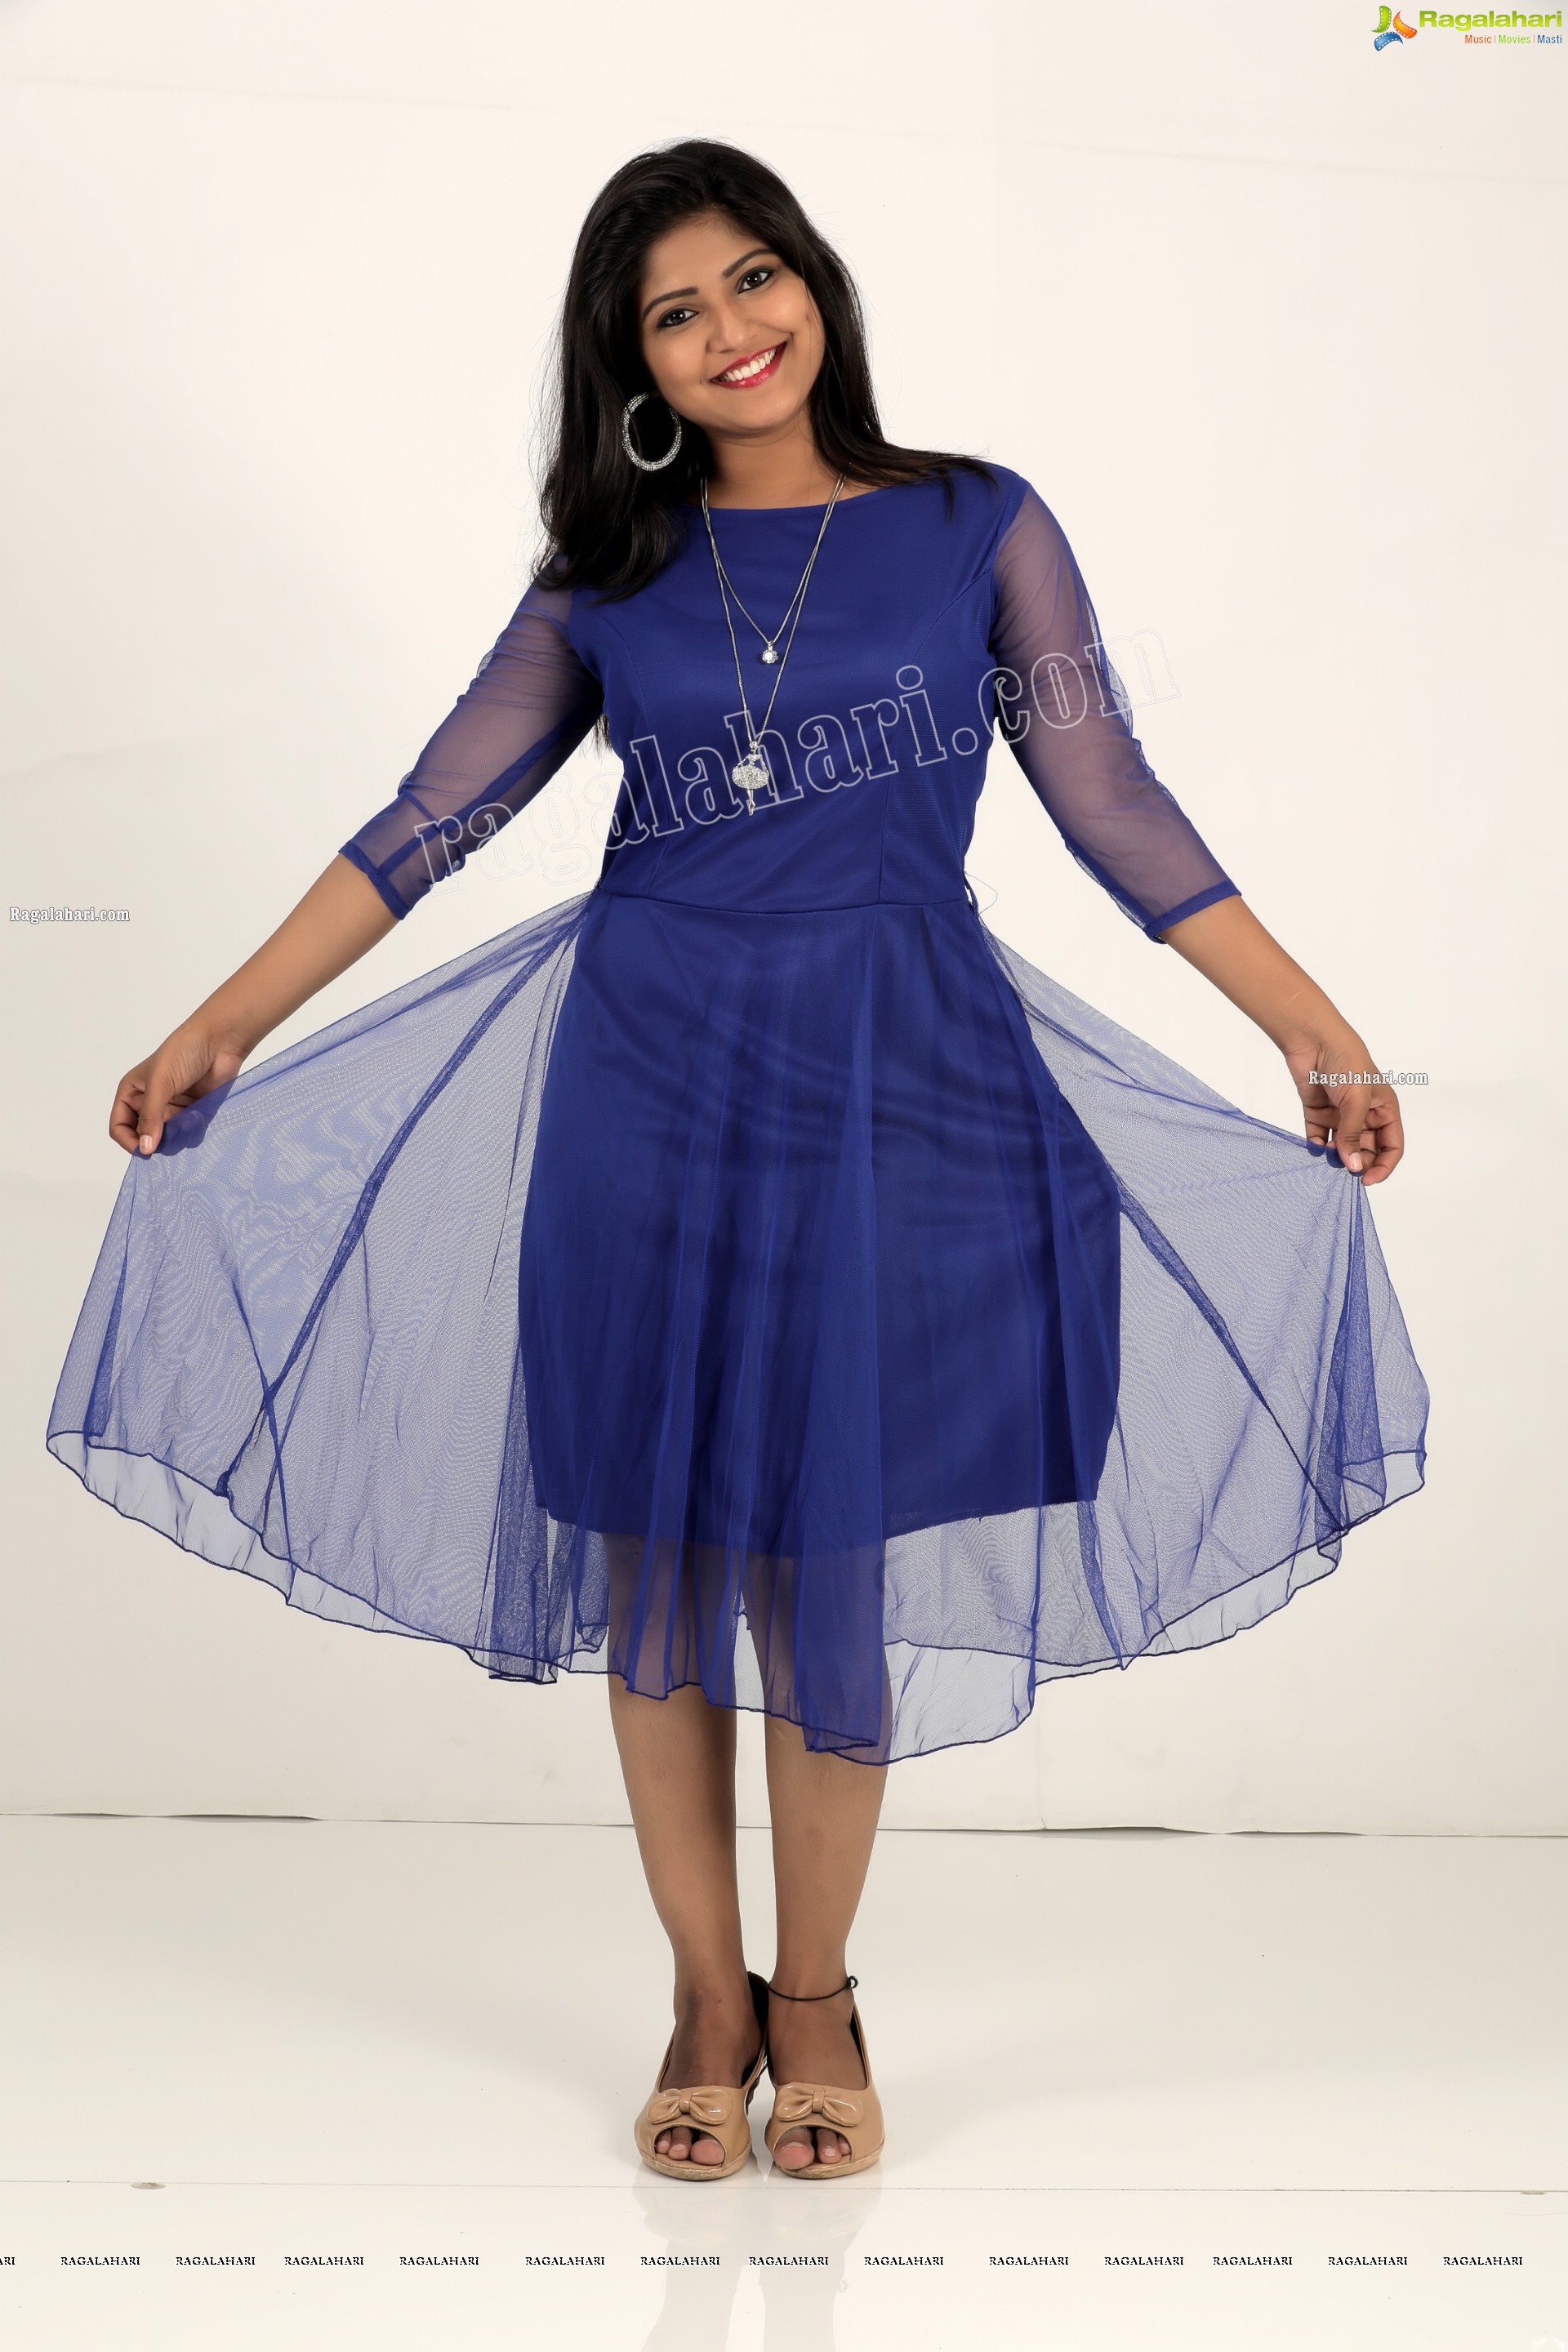 Shabeena Shaik in Royal Blue Colour A-Line Net Dress Exclusive Photo Shoot